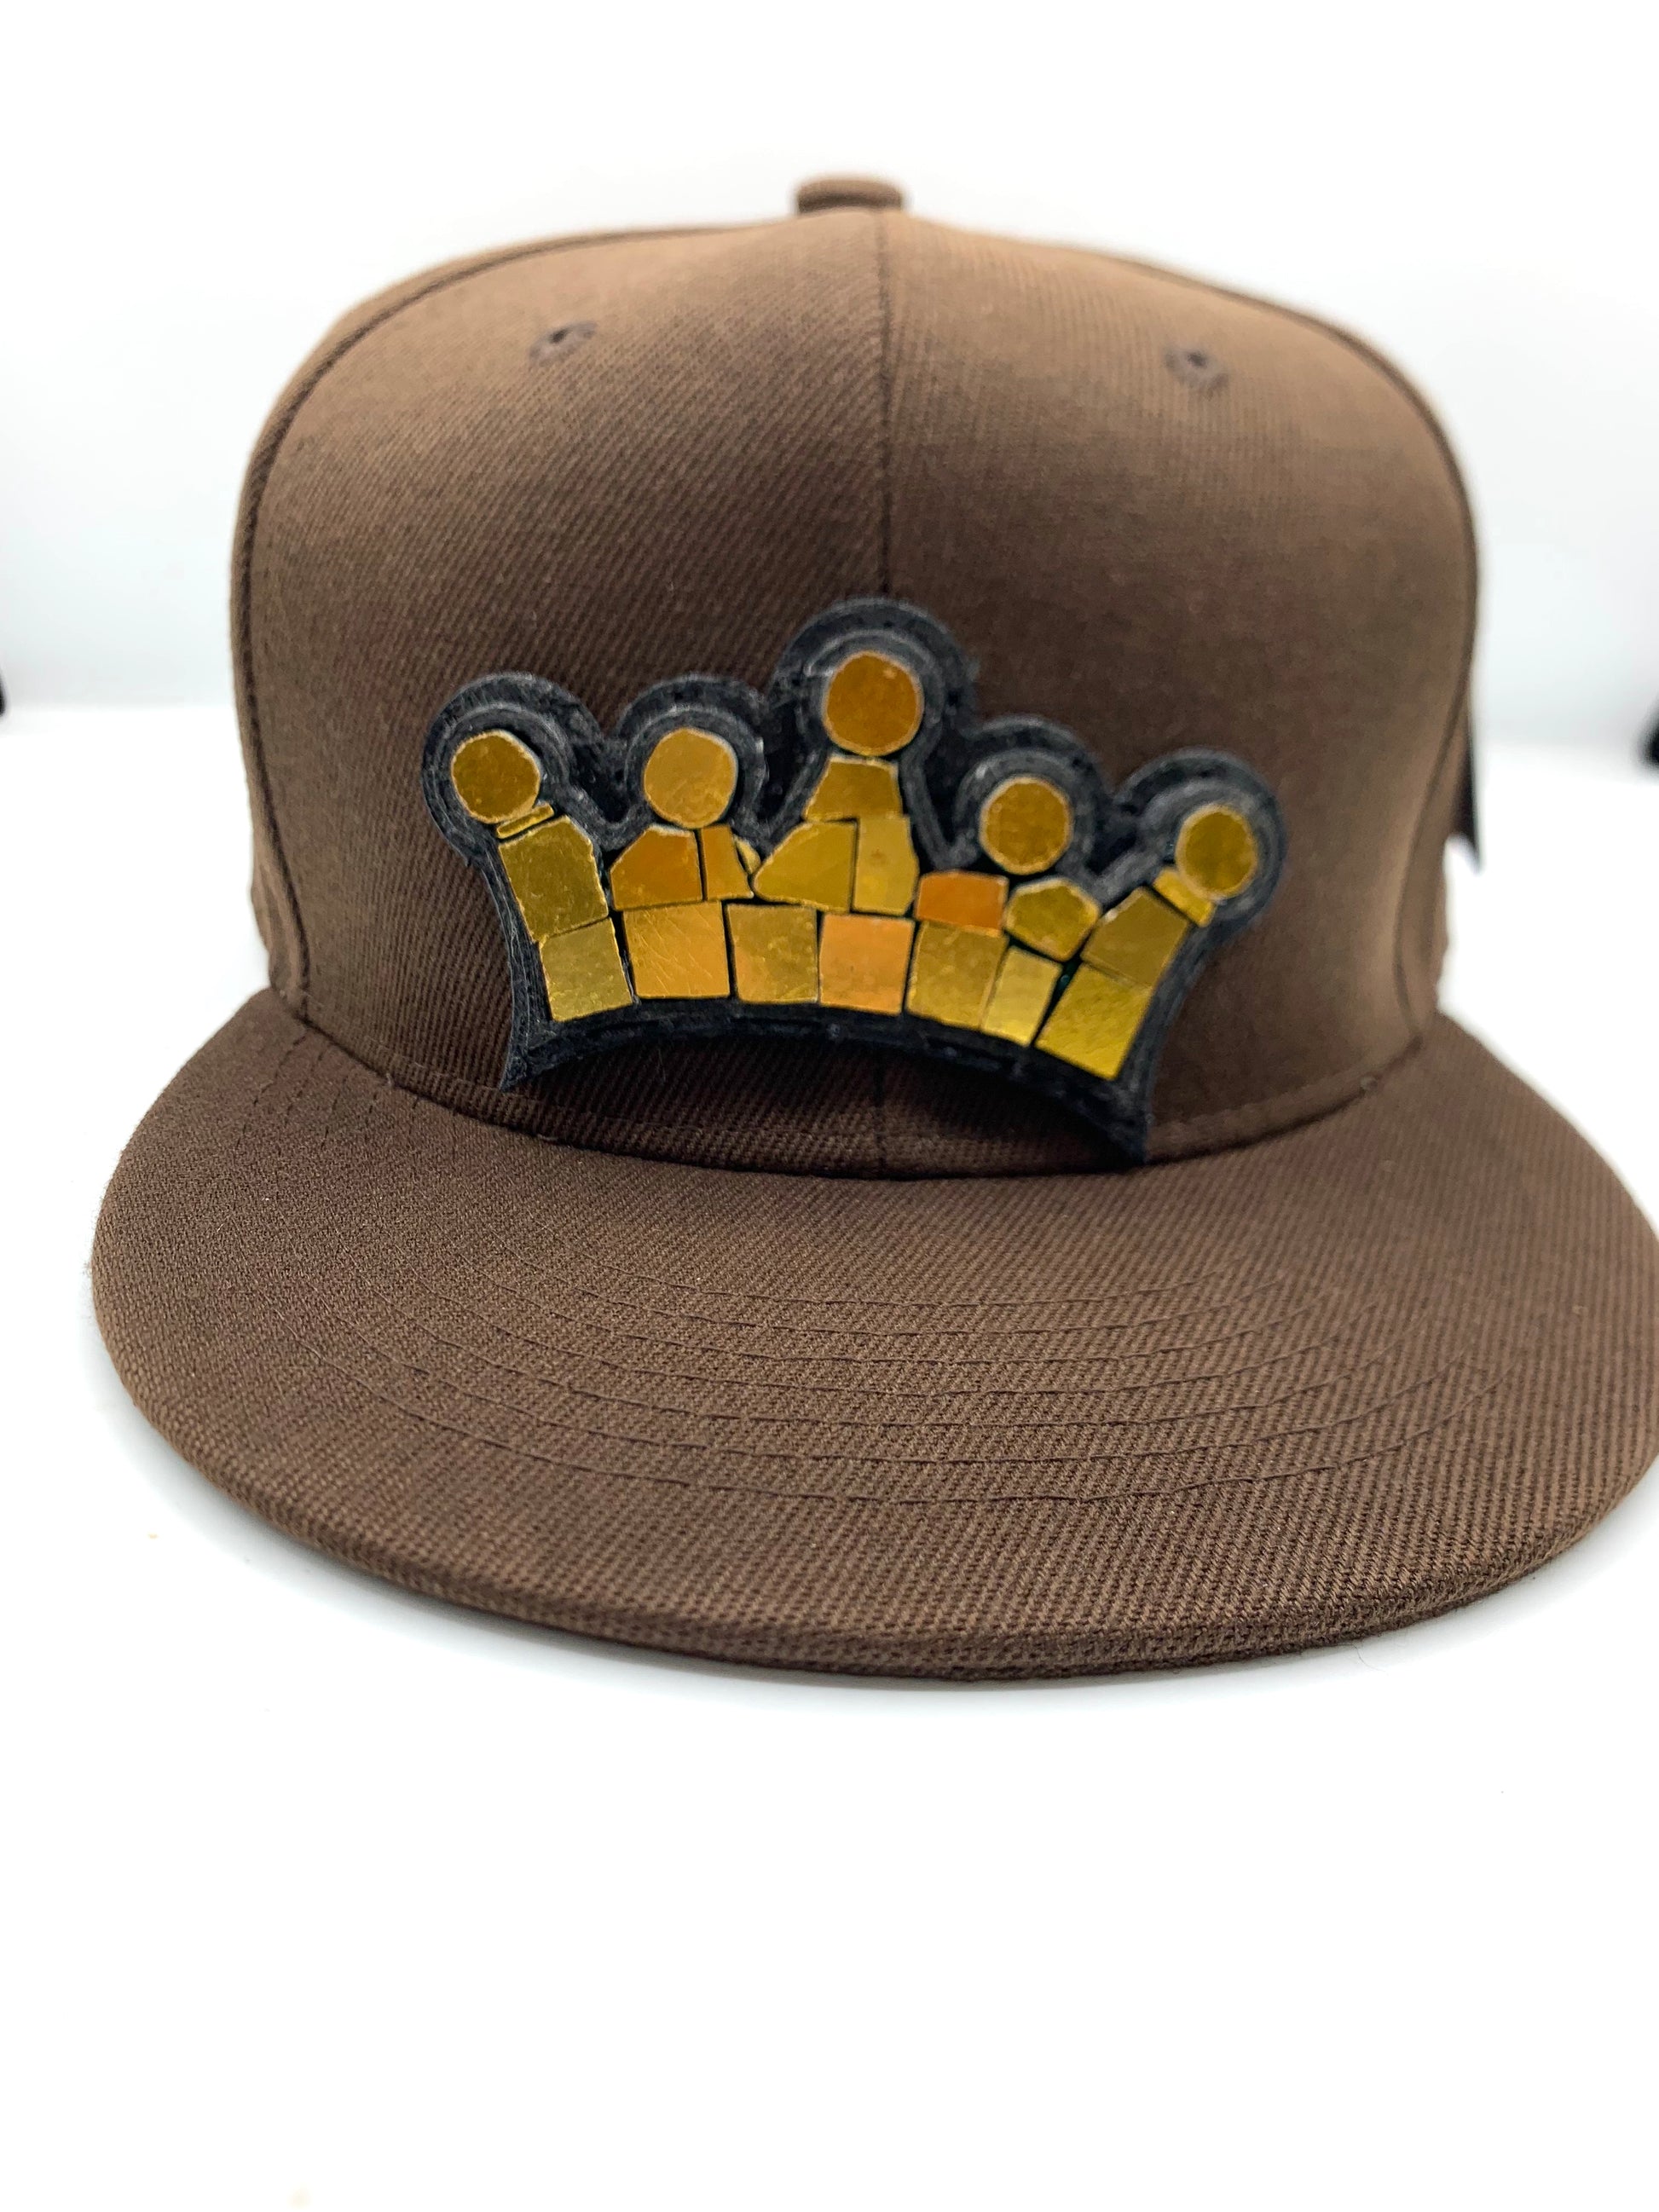 brown baseball hat with a 18 karat gold crown